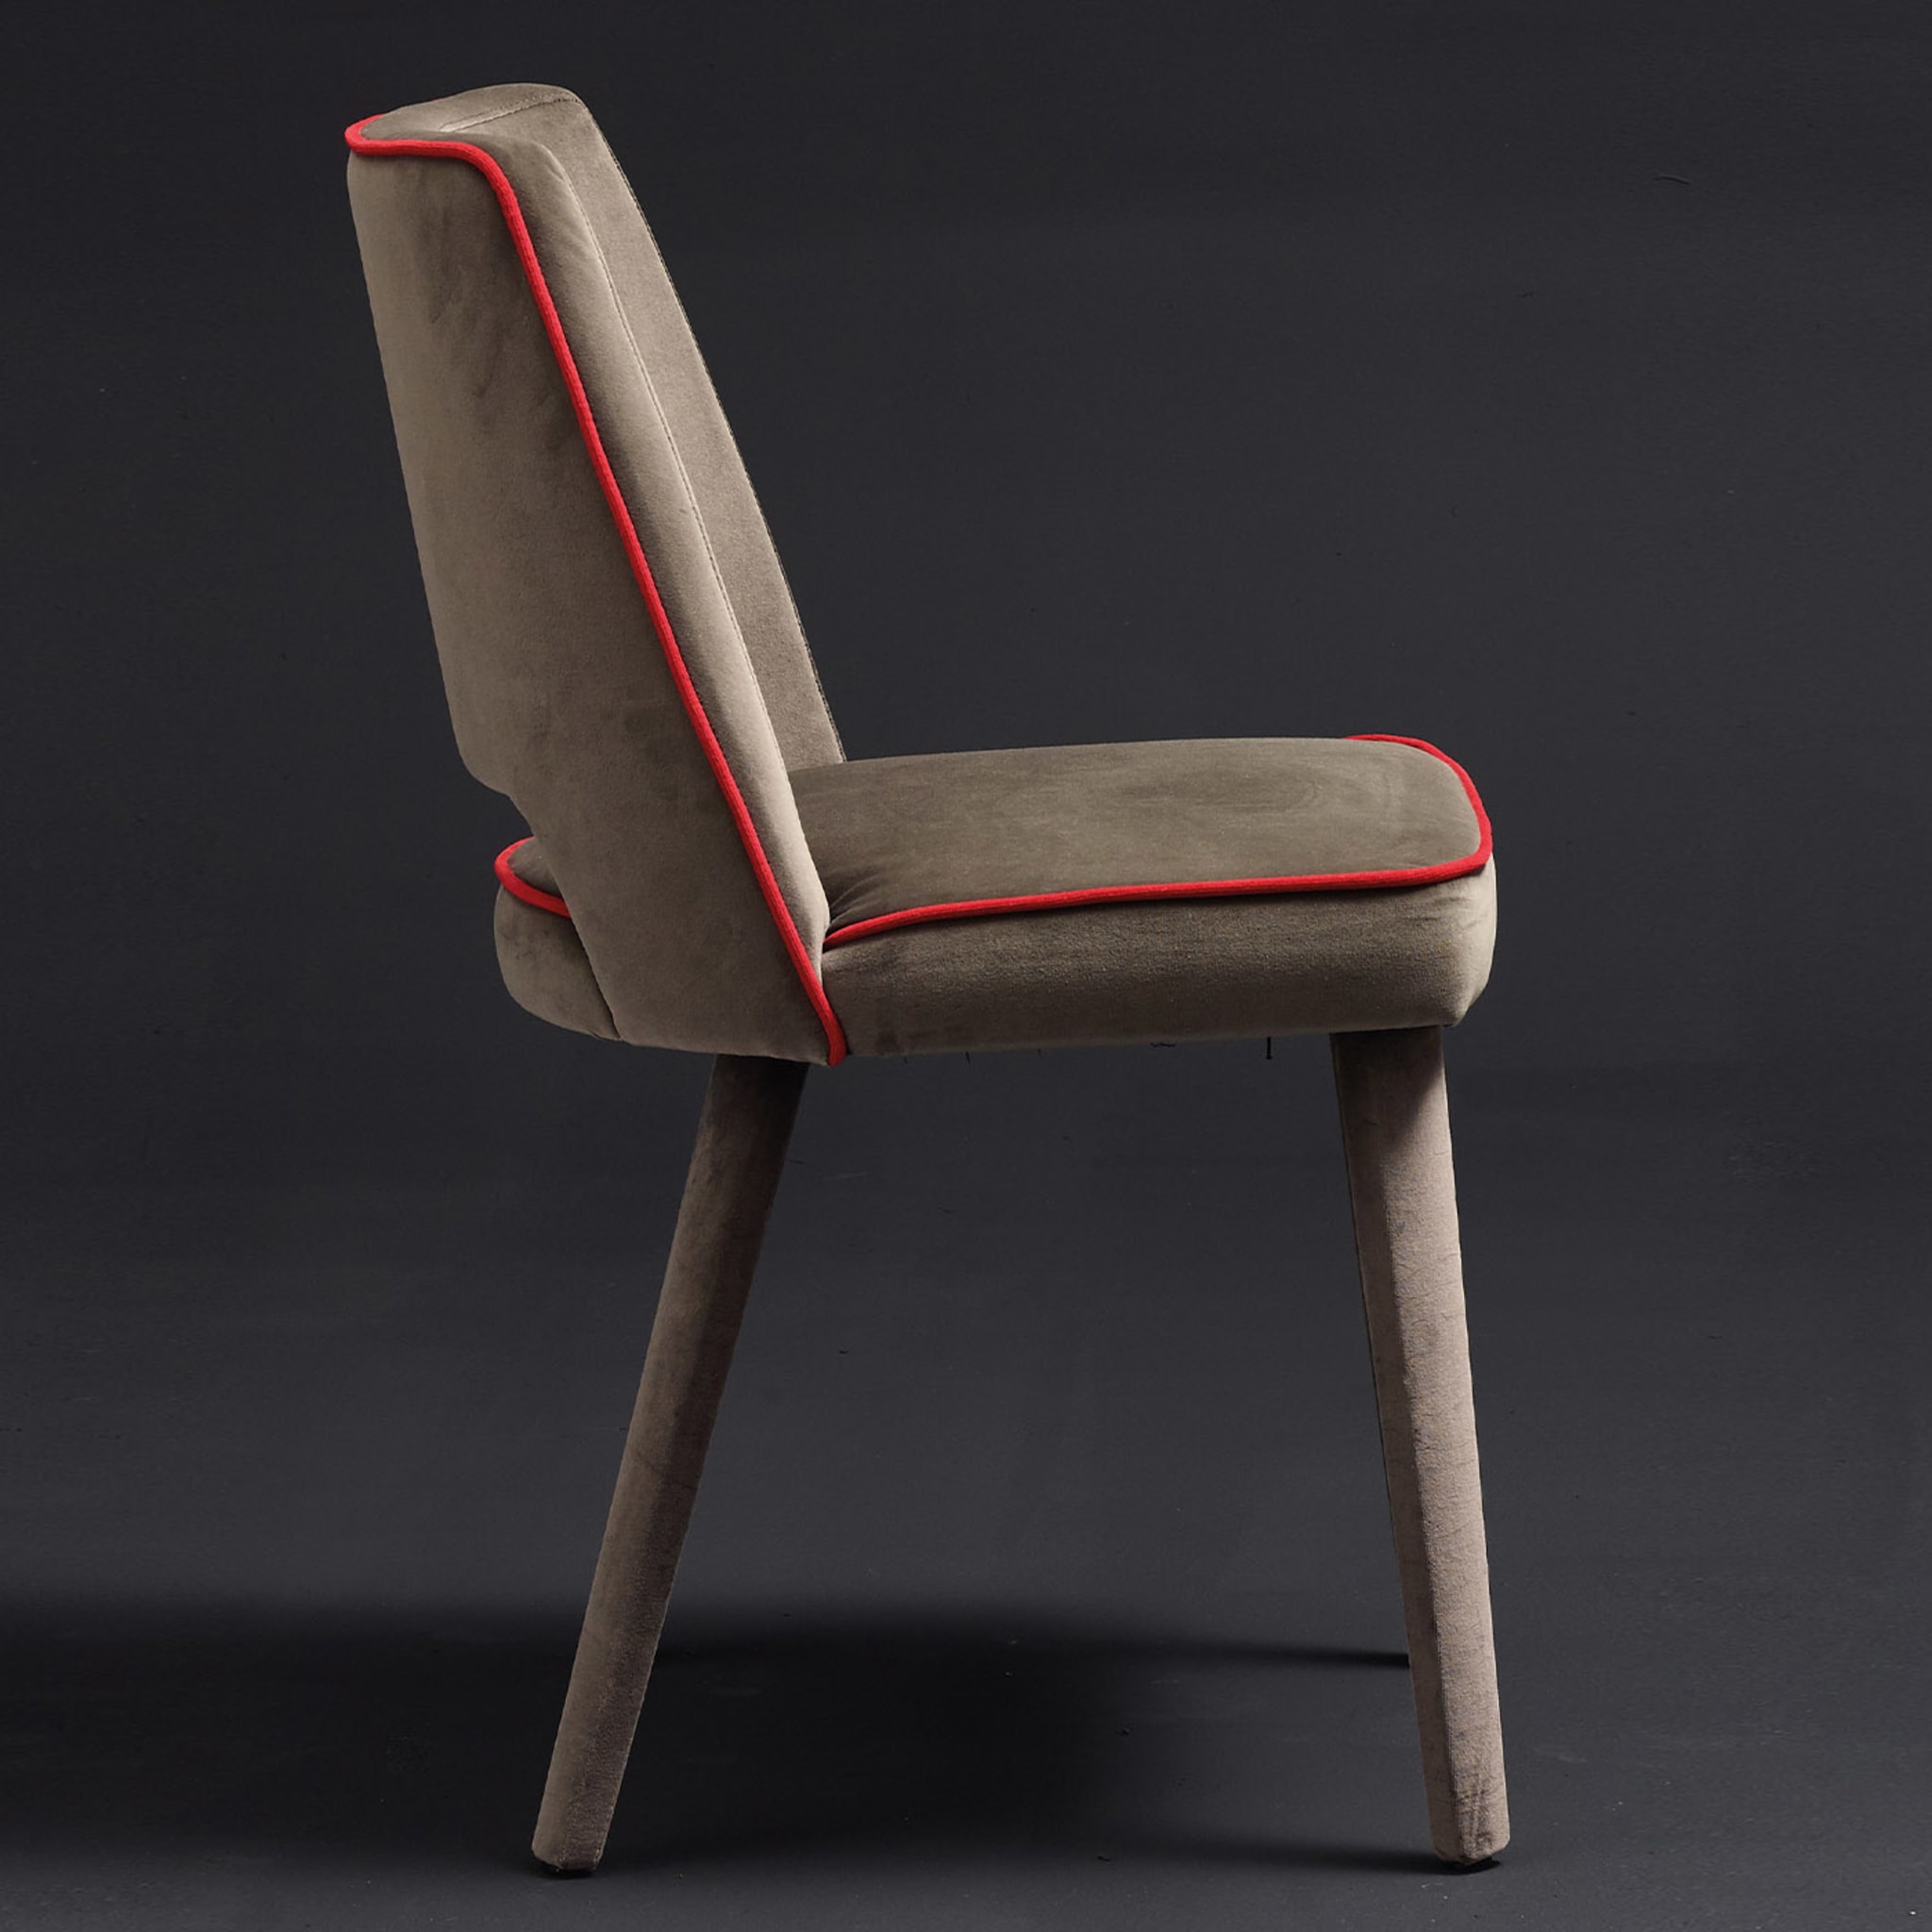 Grace Chestnut & Red Chair by P. Borgonovo - Alternative view 3